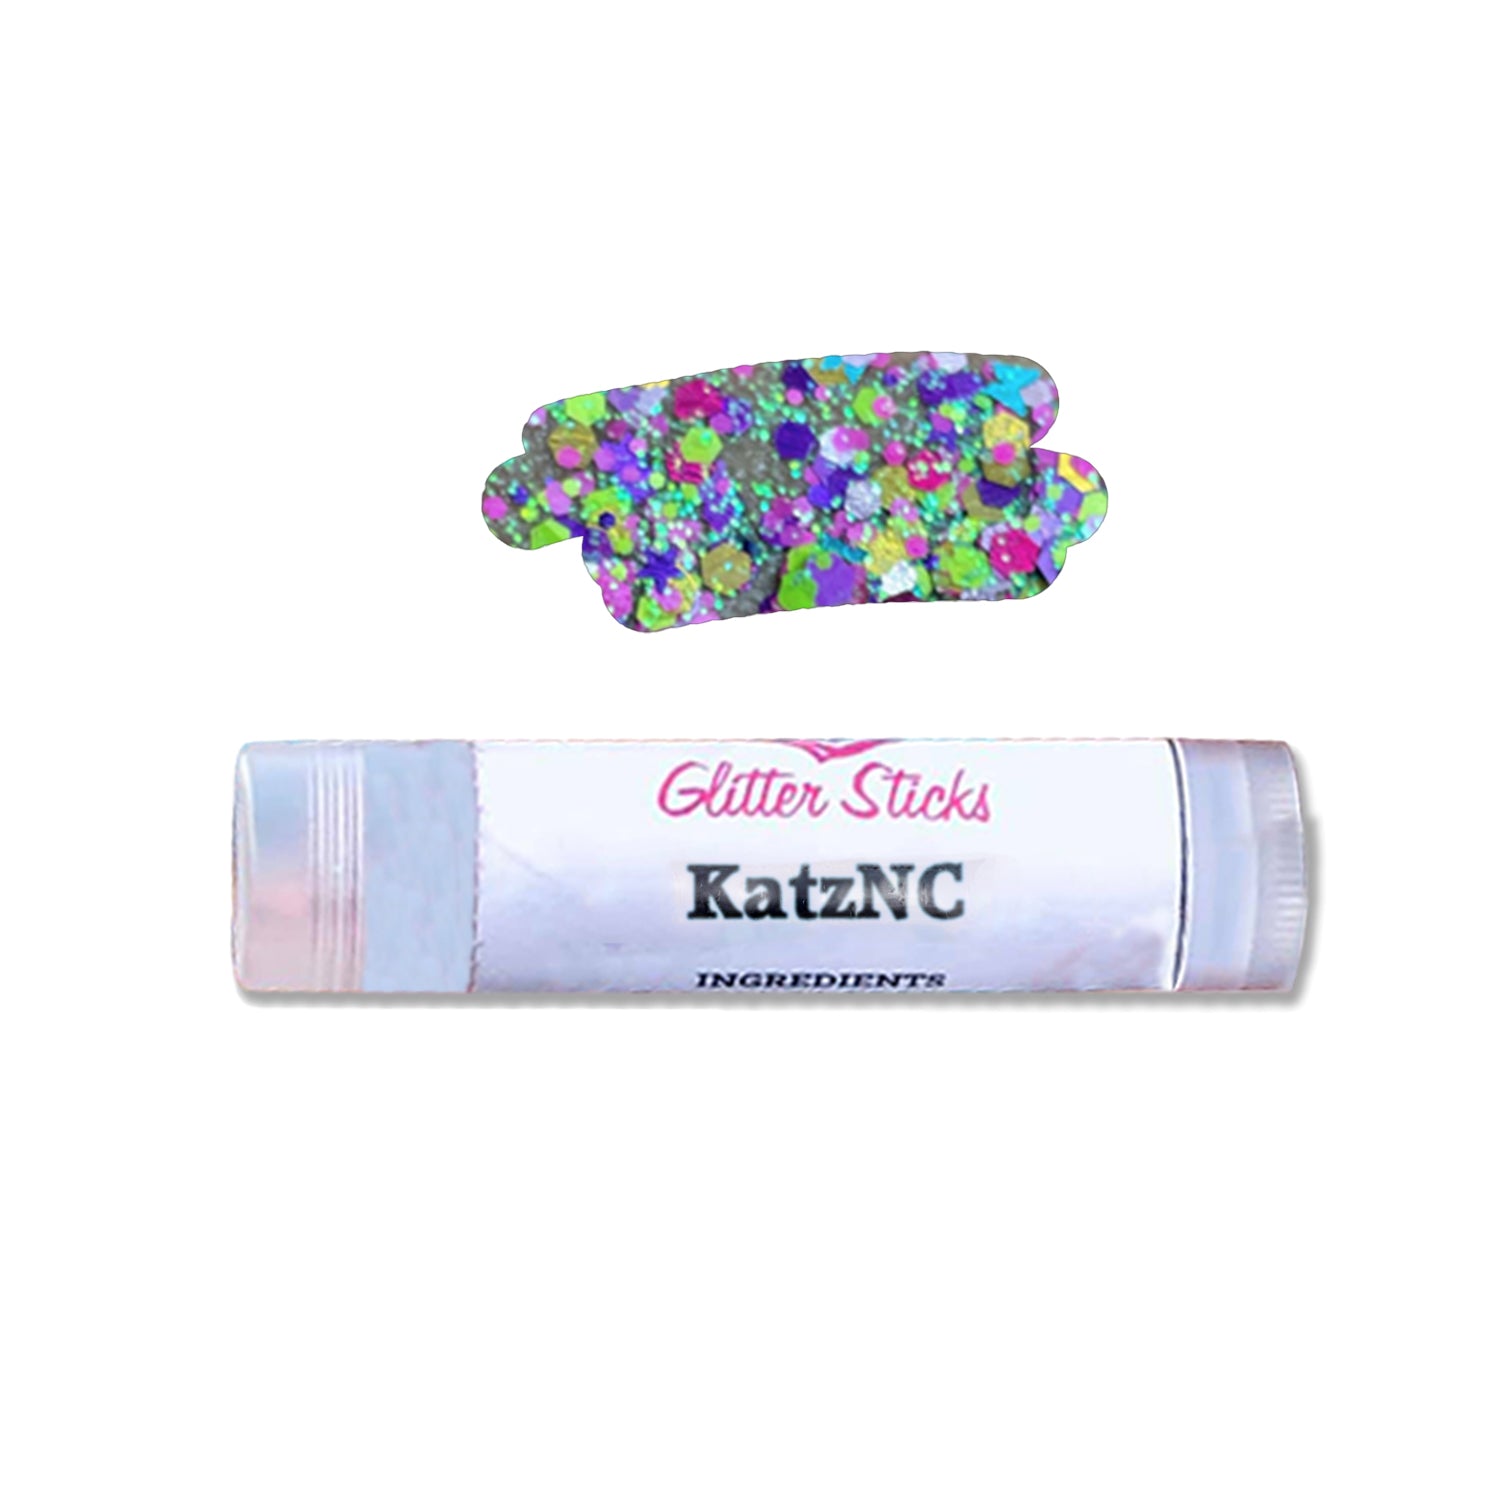 Creative Faces Glitter Stick - KatzNC (3.5 gm/4.5 ml)